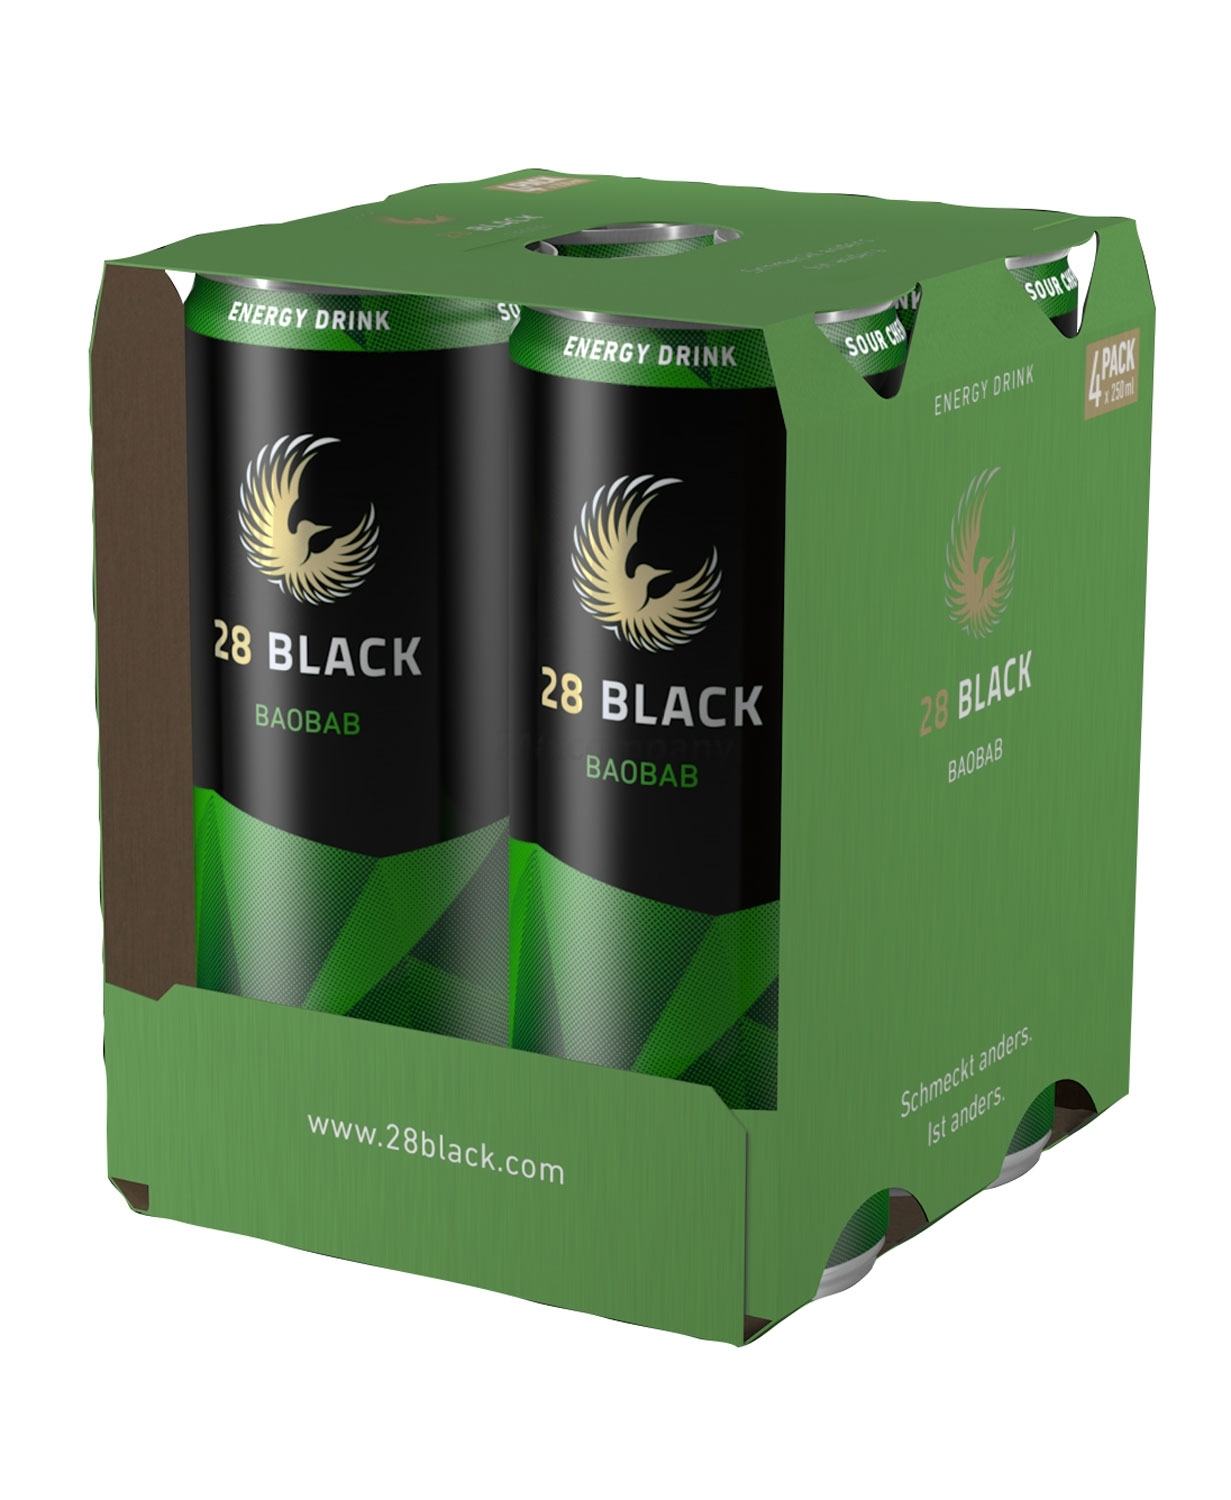 28 Black Baobab Energy Drink 4er Pack inkl. Pfand - 4x 250ml = 1000ml - EINWEG